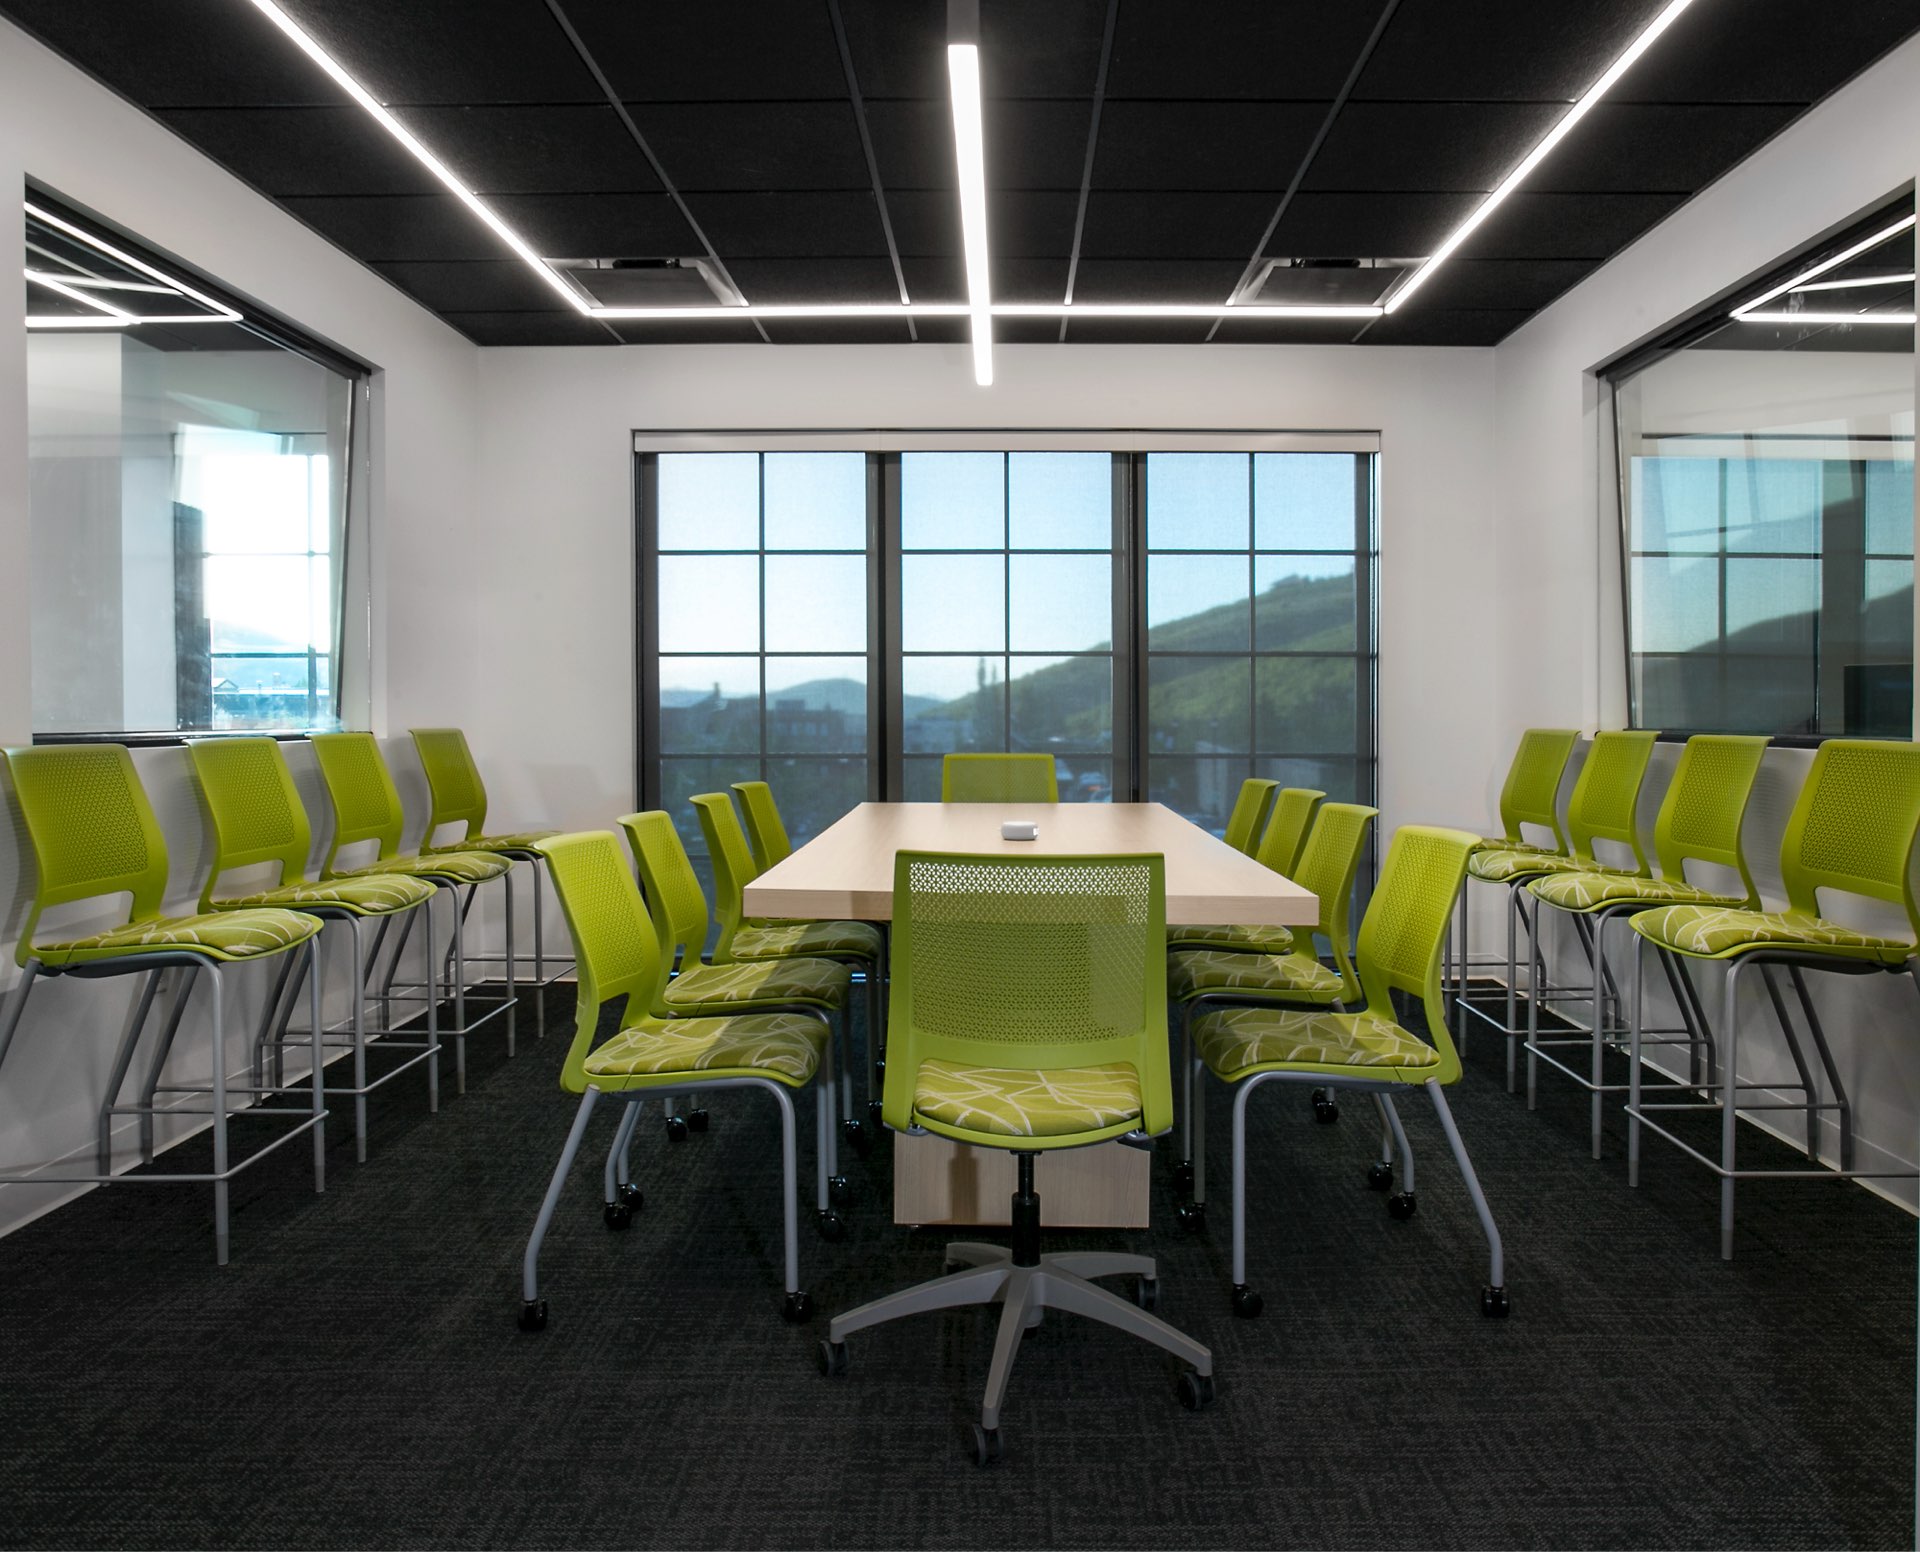 Meeting room, KPCW Radio, architectural design by Elliott Workgroup